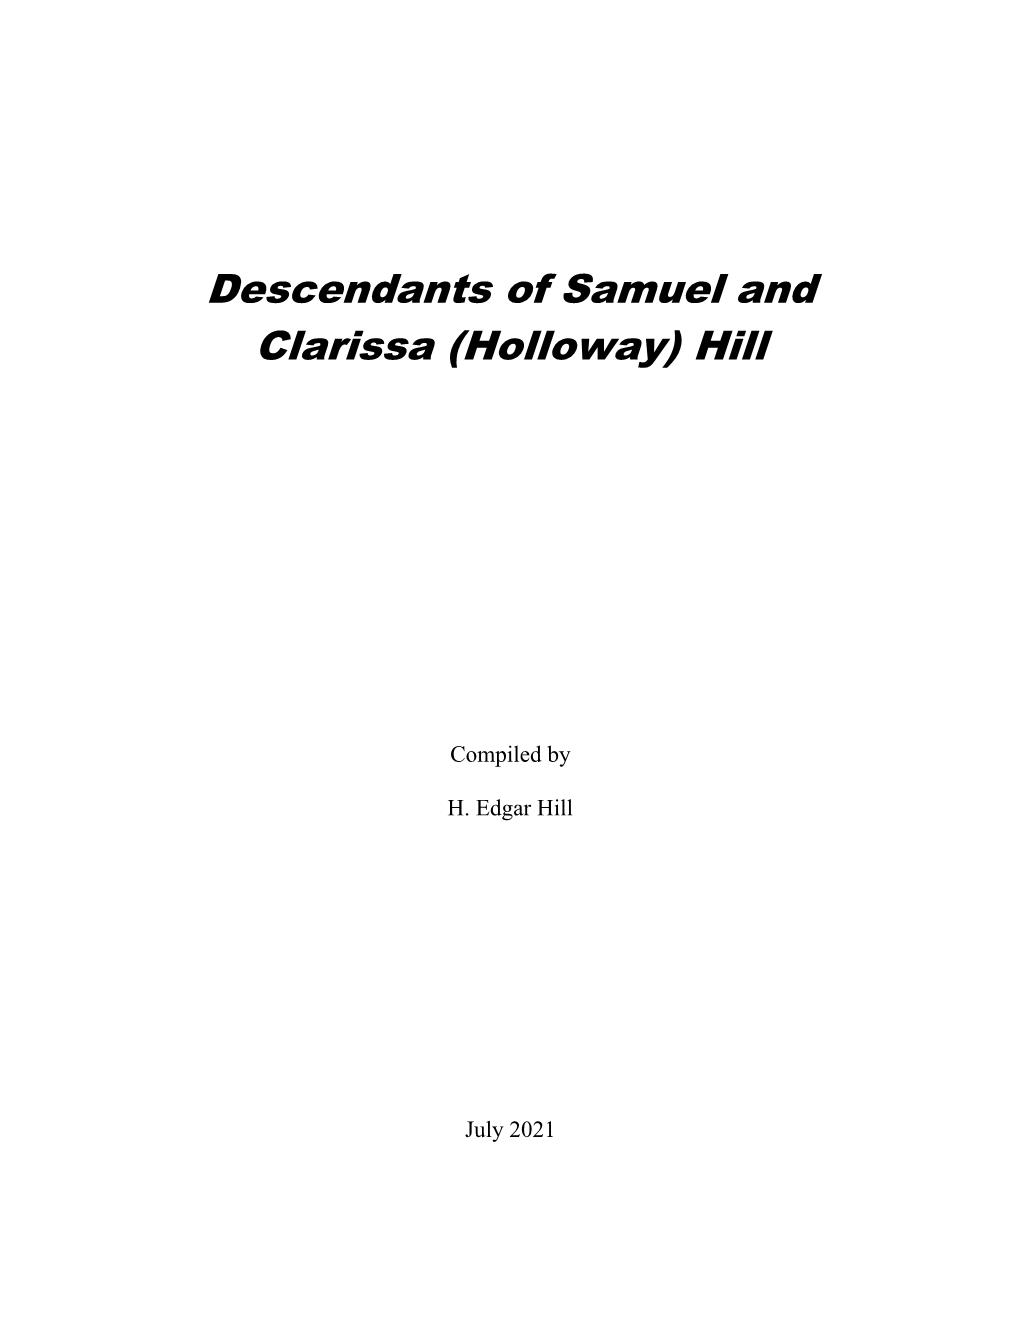 Descendants of Samuel and Clarissa (Holloway) Hill